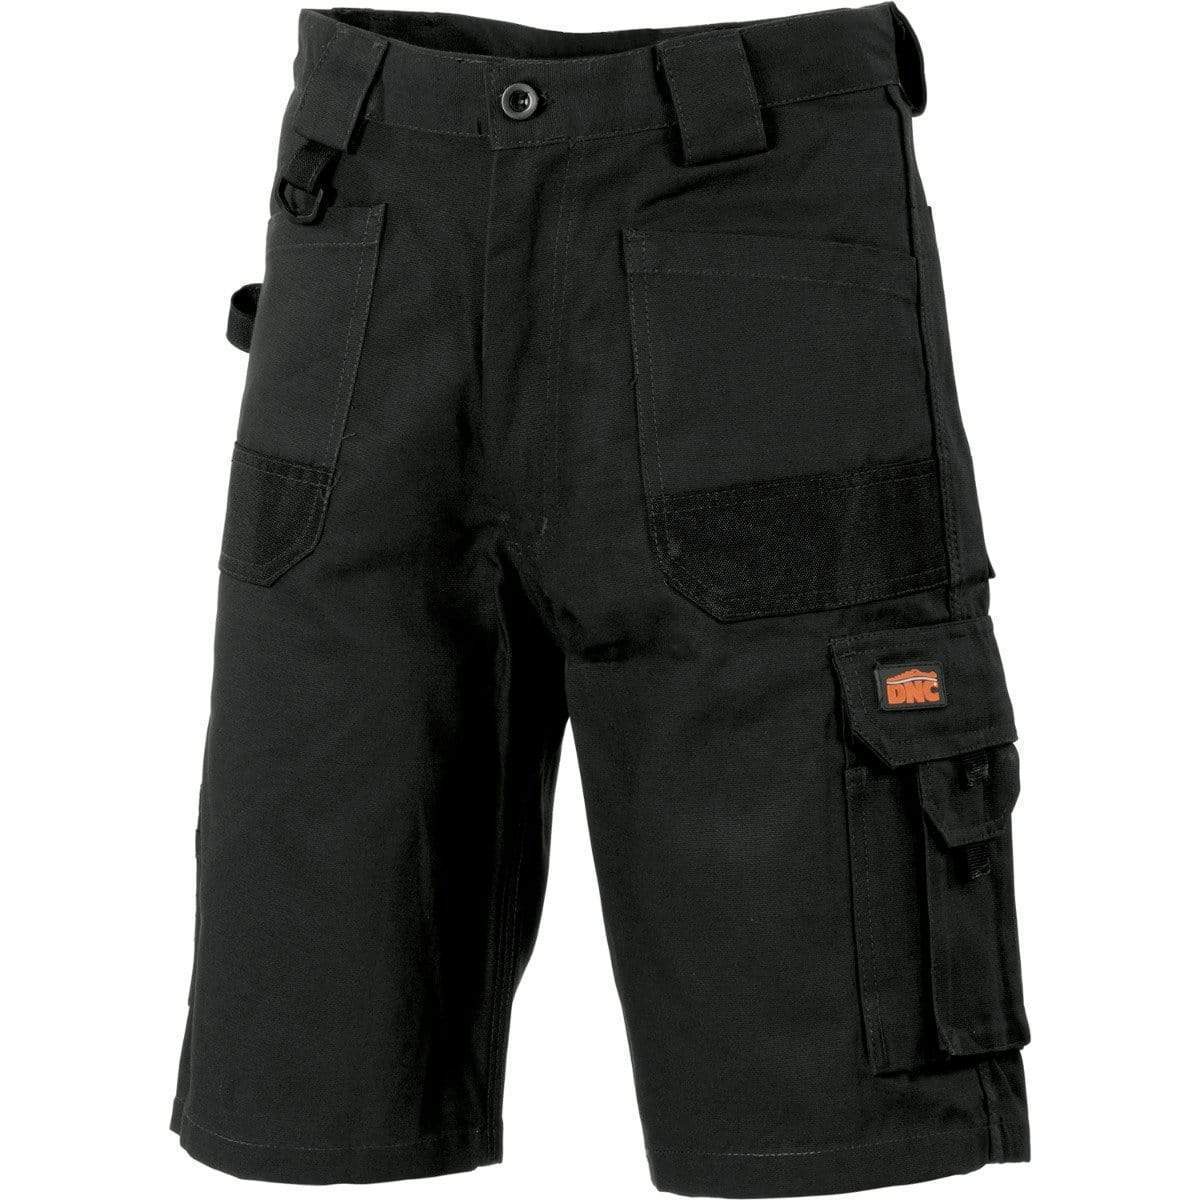 Dnc Workwear Duratex Cotton Duck Weave Cargo Shorts - 3334 Work Wear DNC Workwear Black 72R 